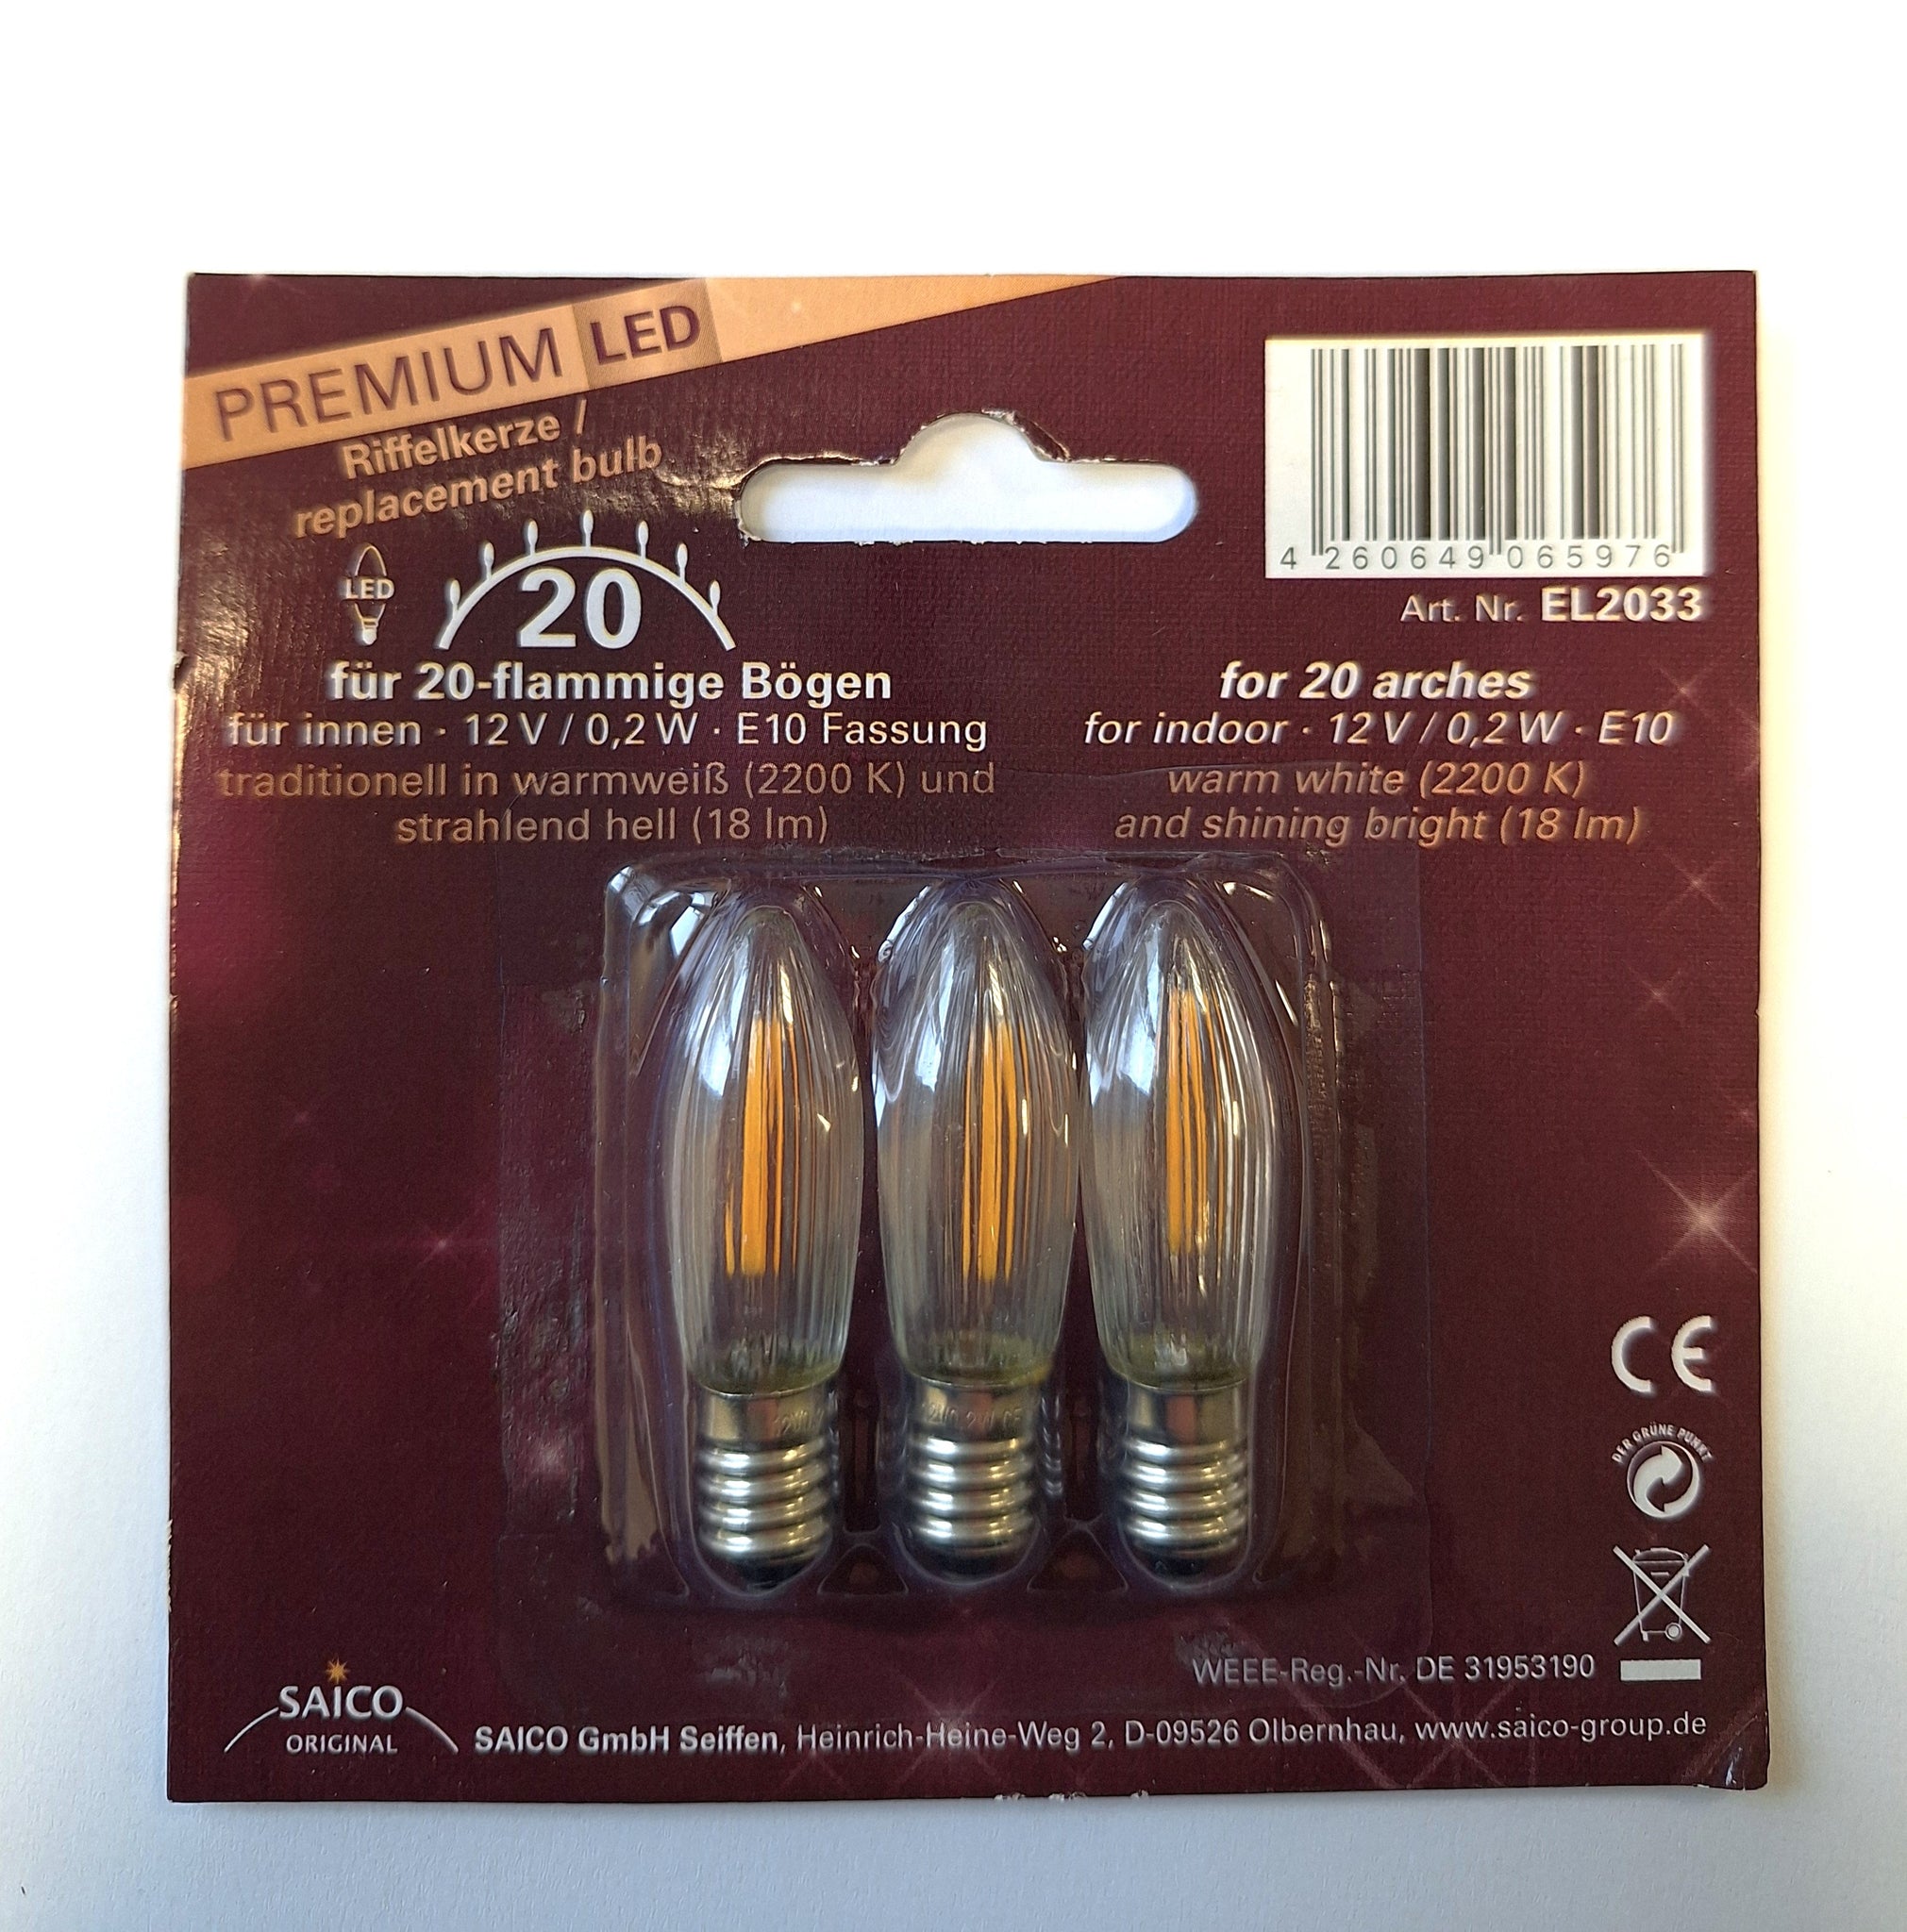 Premium LED replacement lamp 3x 12V - 0.2W - E10